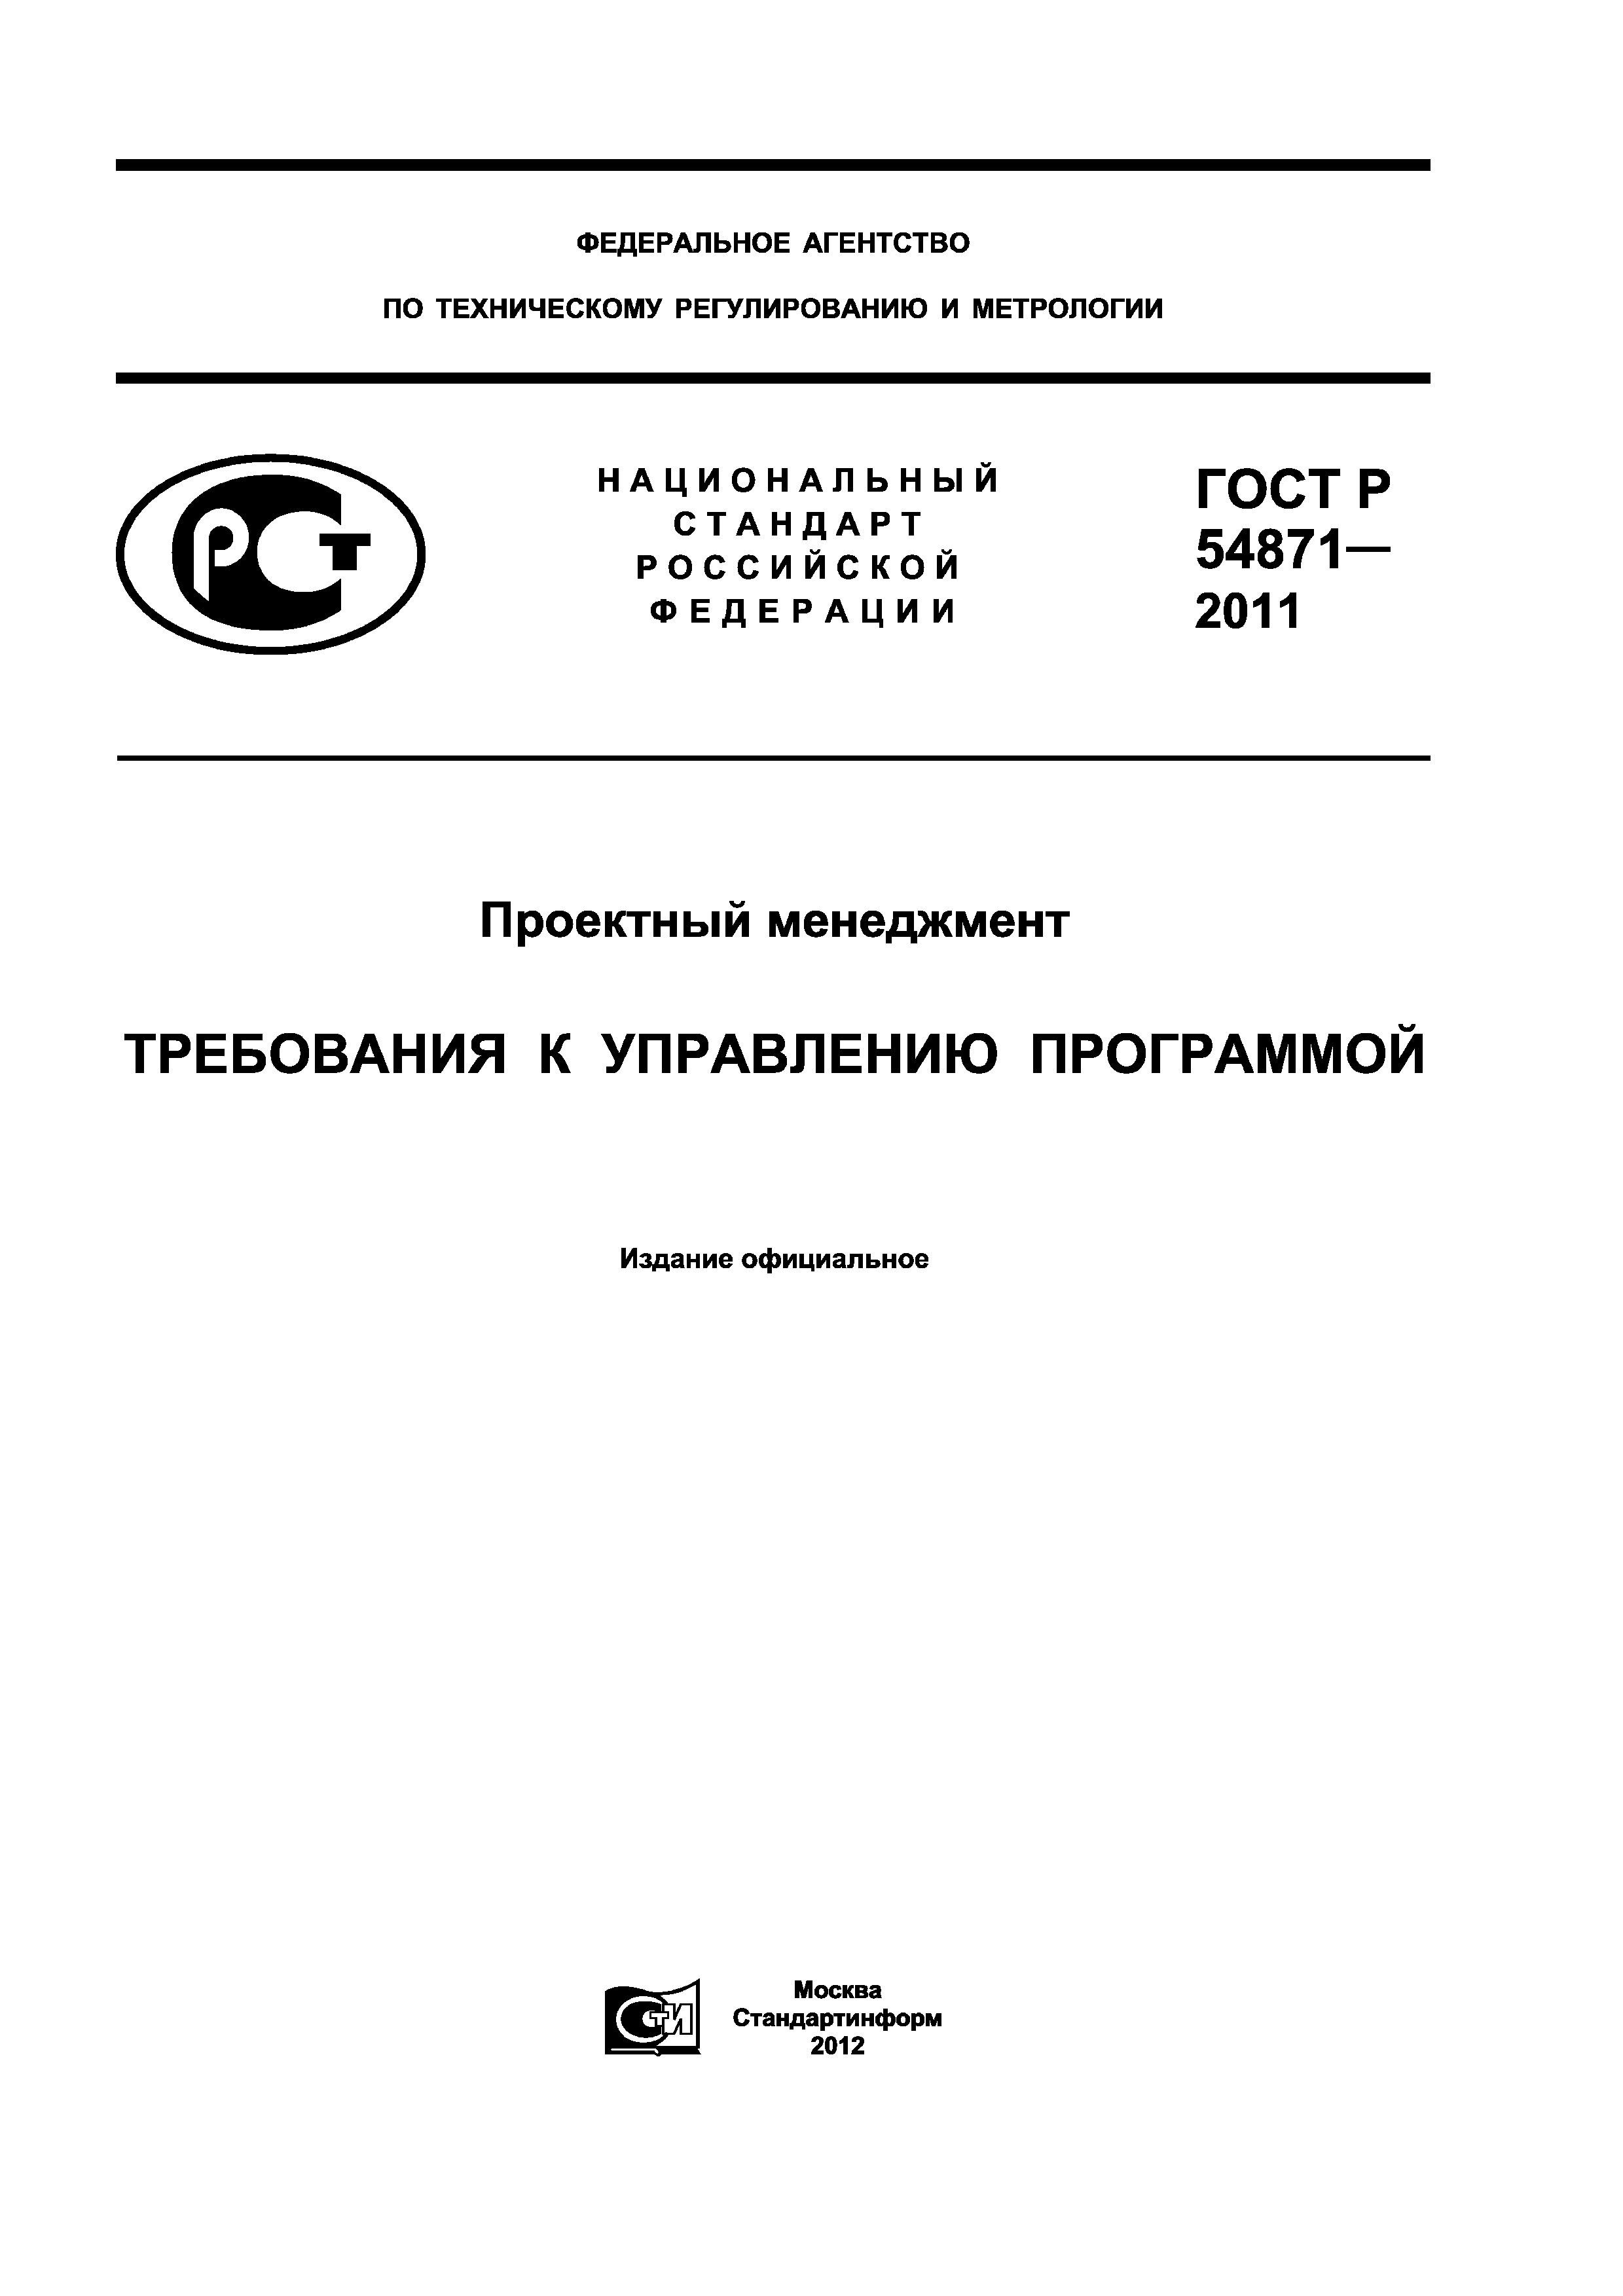 ГОСТ Р 54871-2011